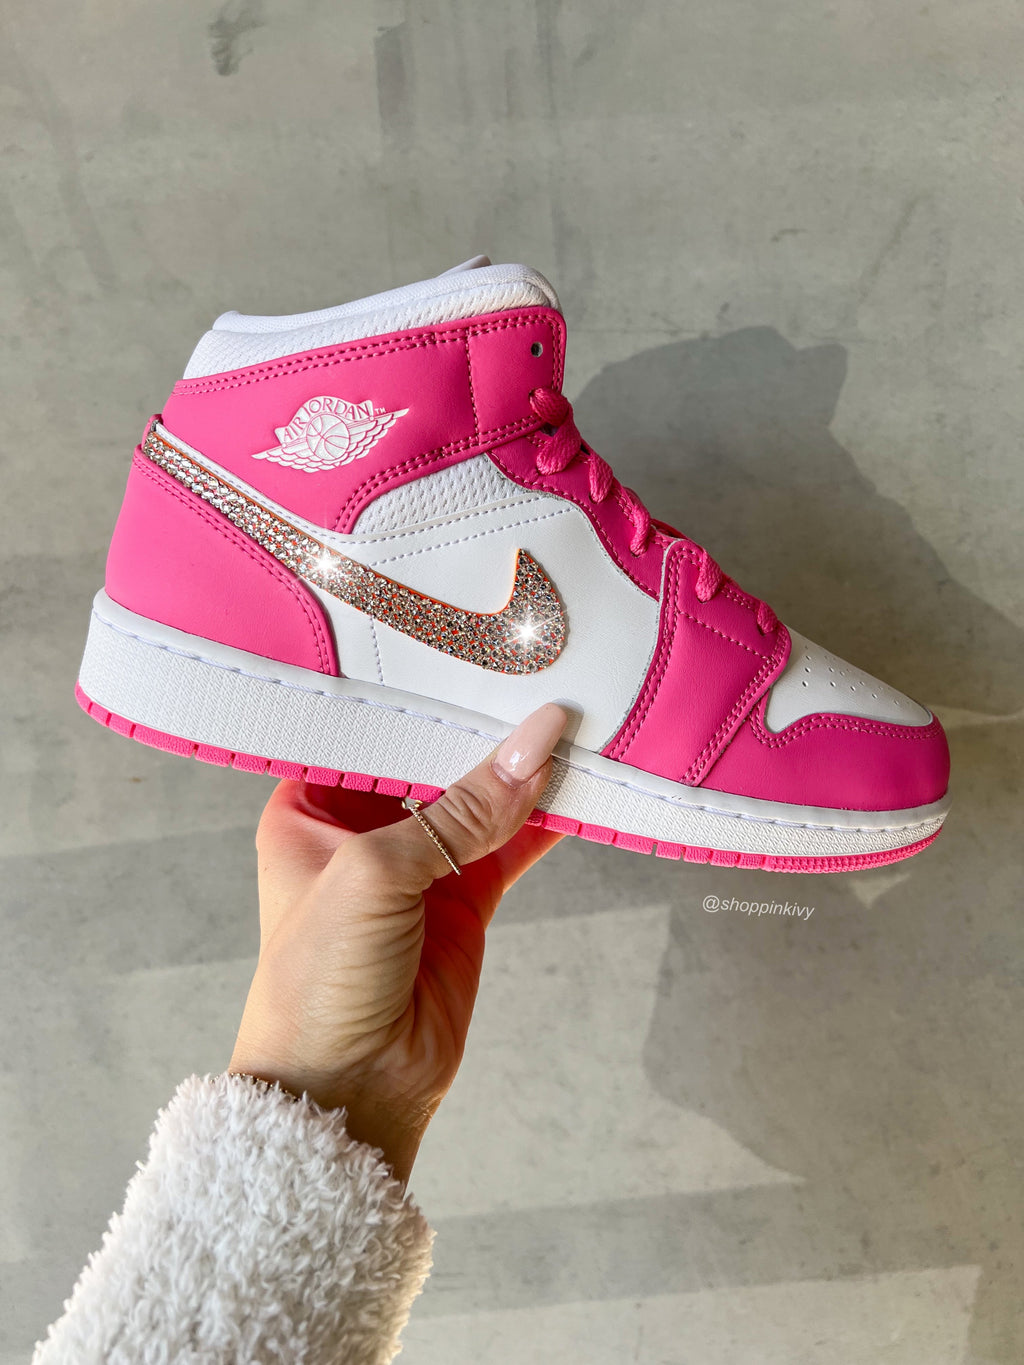 SIZE 6 Rare Pink Swarovski Women’s Air Jordan 1 Mid Shoes